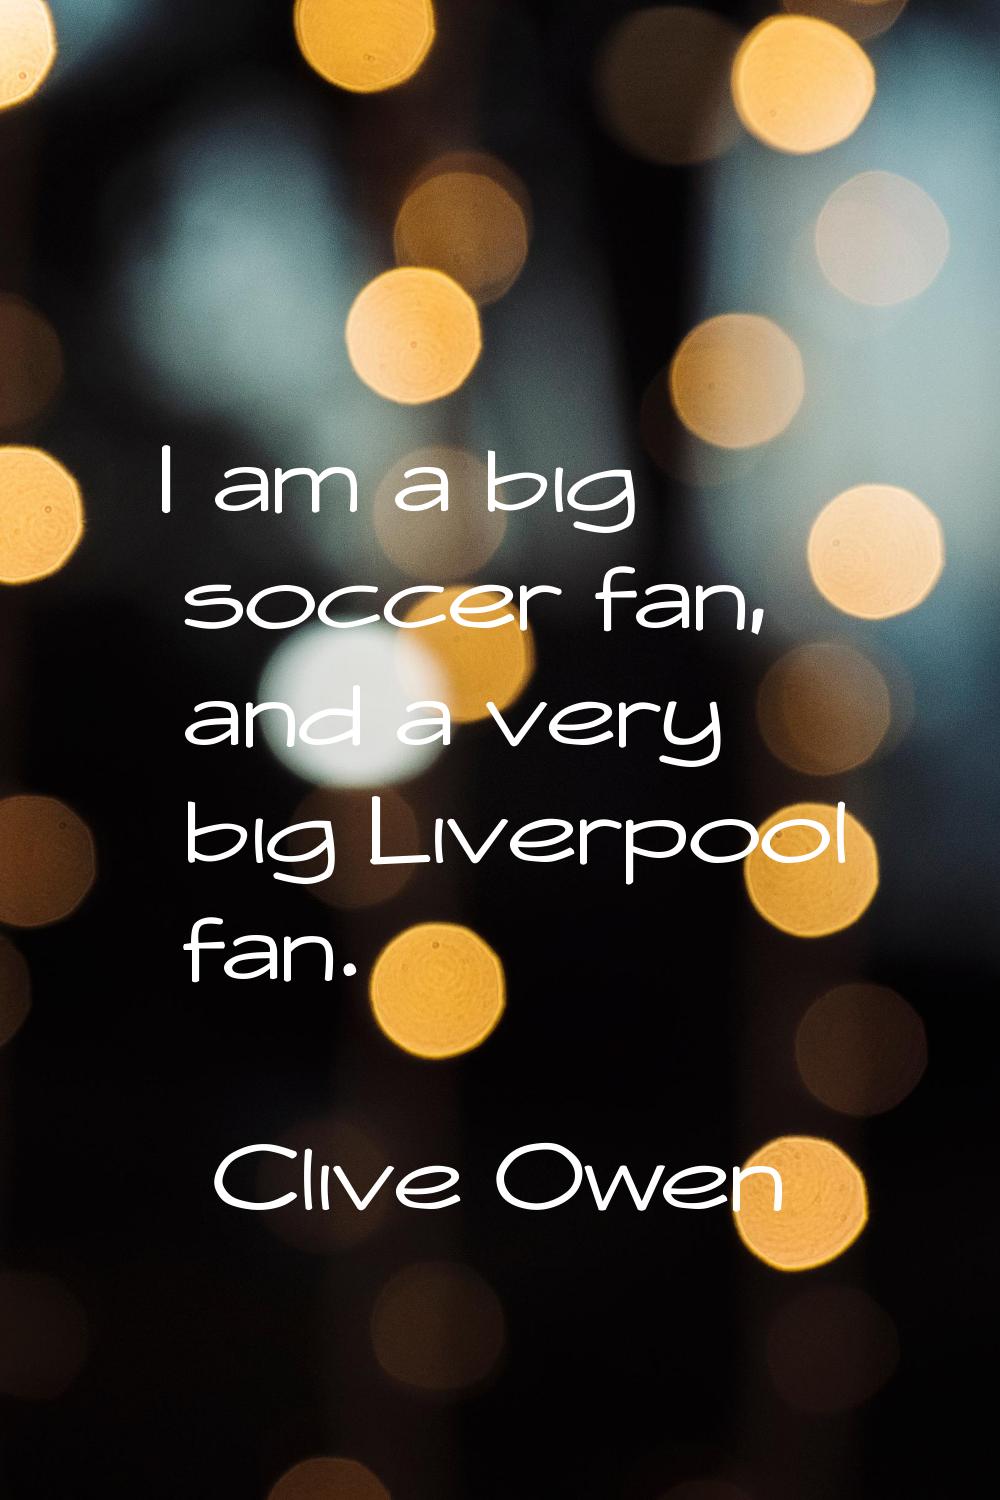 I am a big soccer fan, and a very big Liverpool fan.